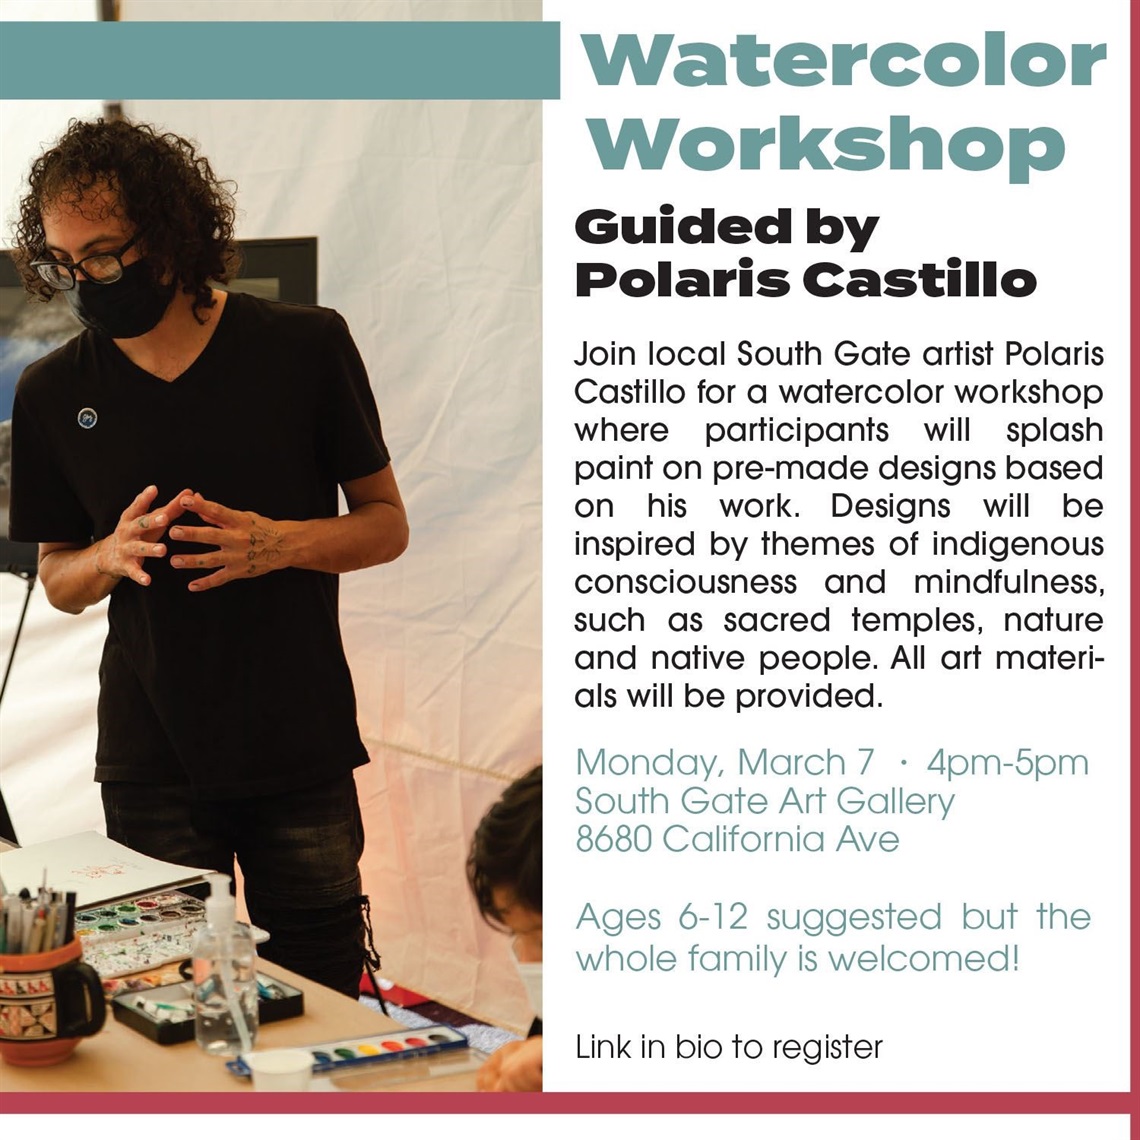 Watercolor-Workshop-Guided-by-Polaris-Castillo.jpg